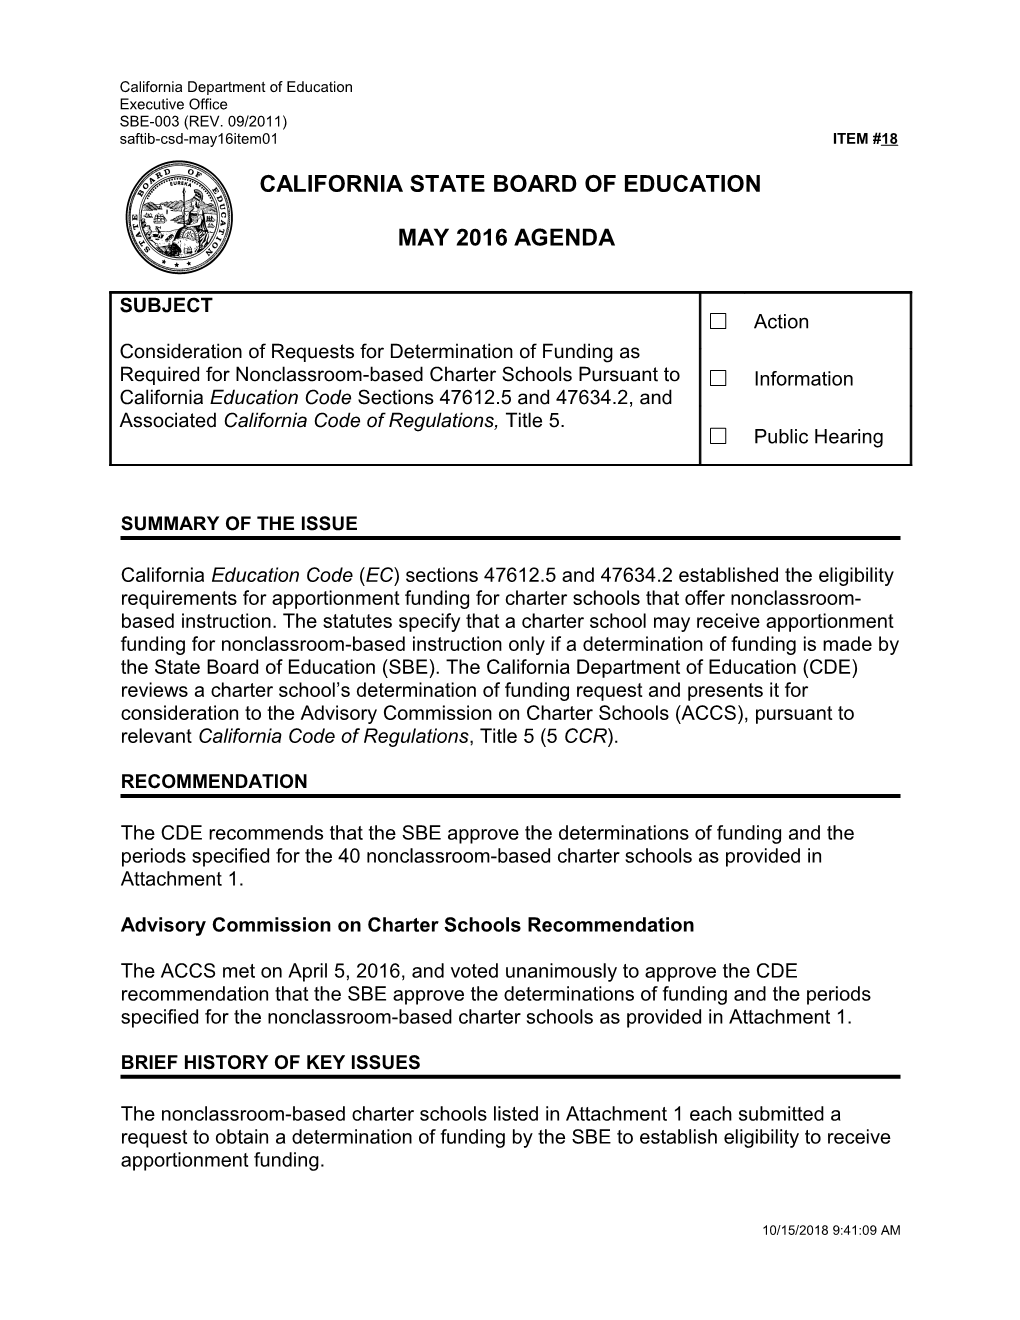 May 2016 Agenda Item 18 - Meeting Agendas (CA State Board of Education)